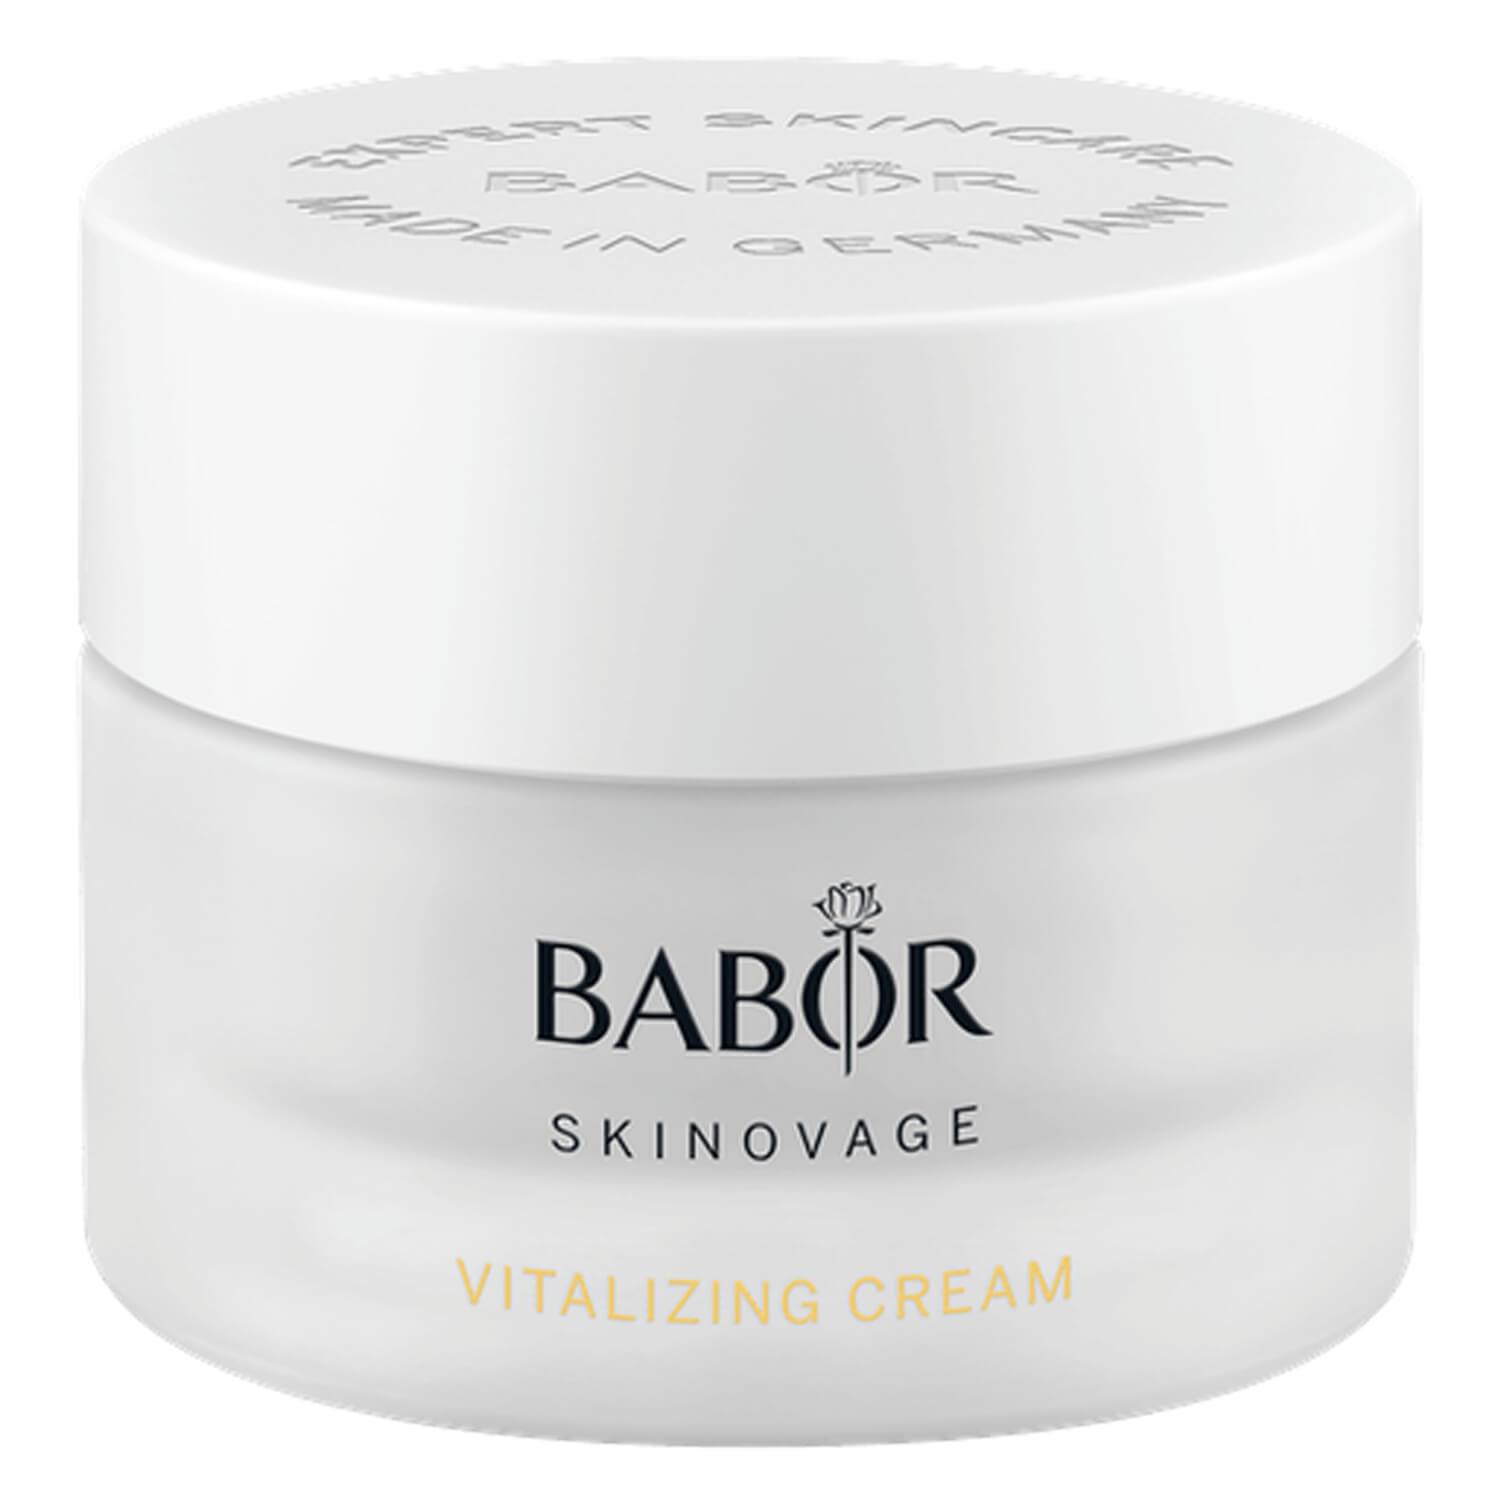 BABOR SKINOVAGE - Vitalizing Cream Tried, Dull Skin